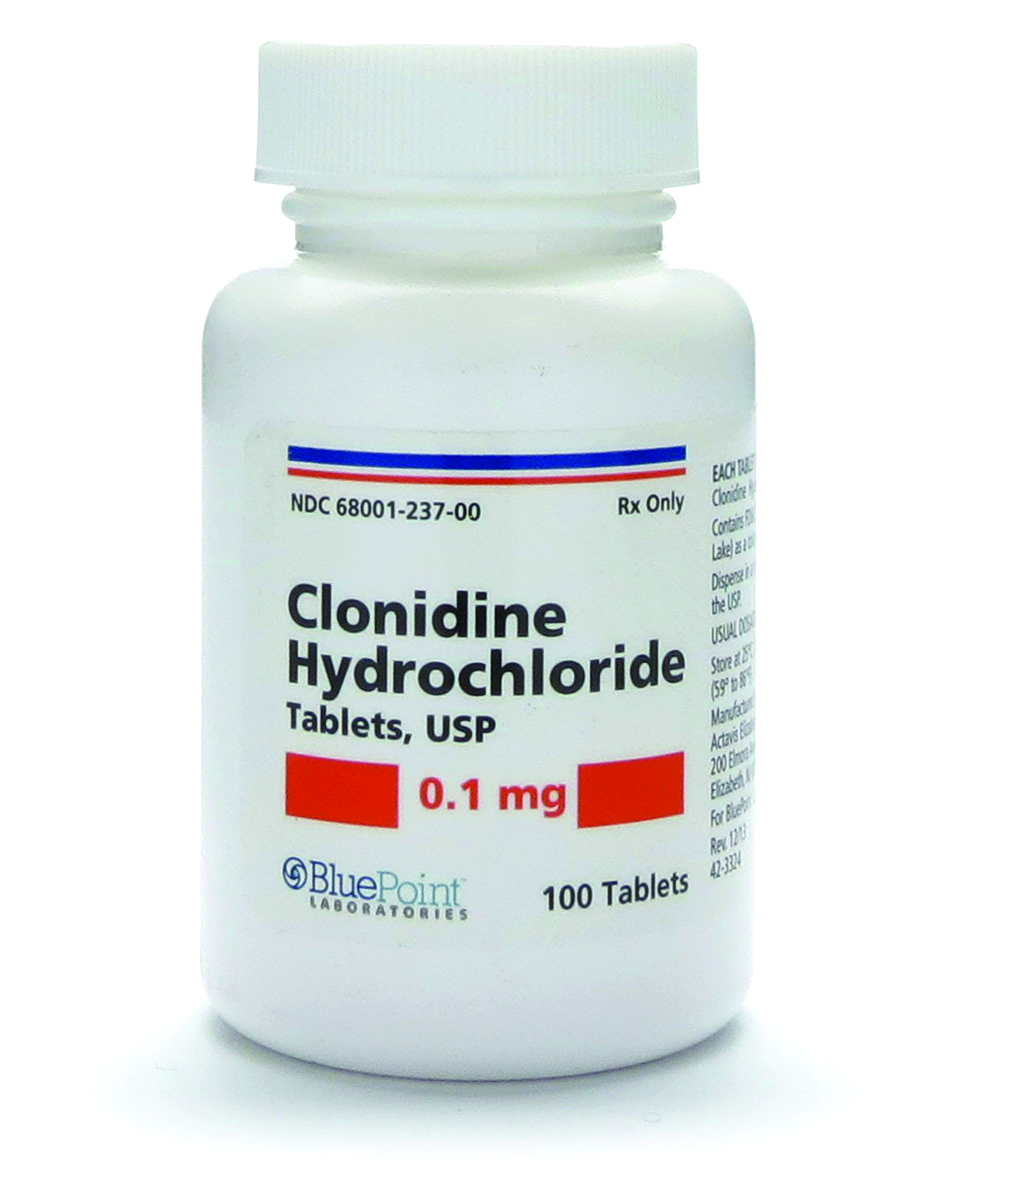 picture of the drug, clonidine